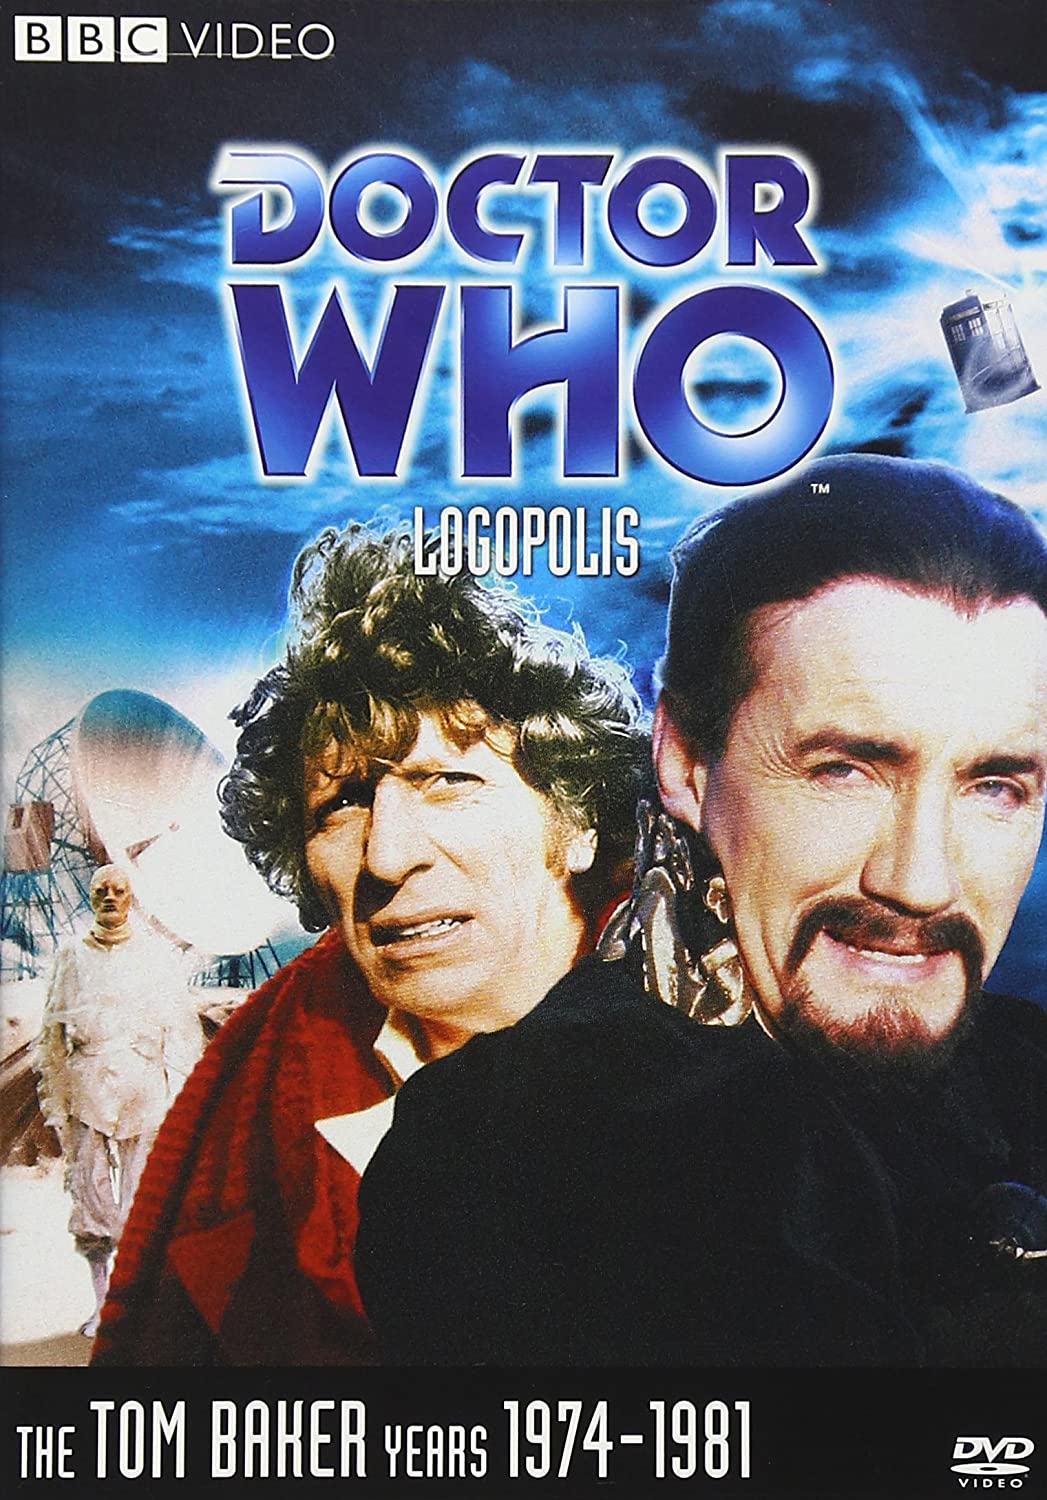 Doctor Who: Logopolis (1981) starring Tom Baker, Anthony Ainley, Matthew Waterhouse, Janet Fielding